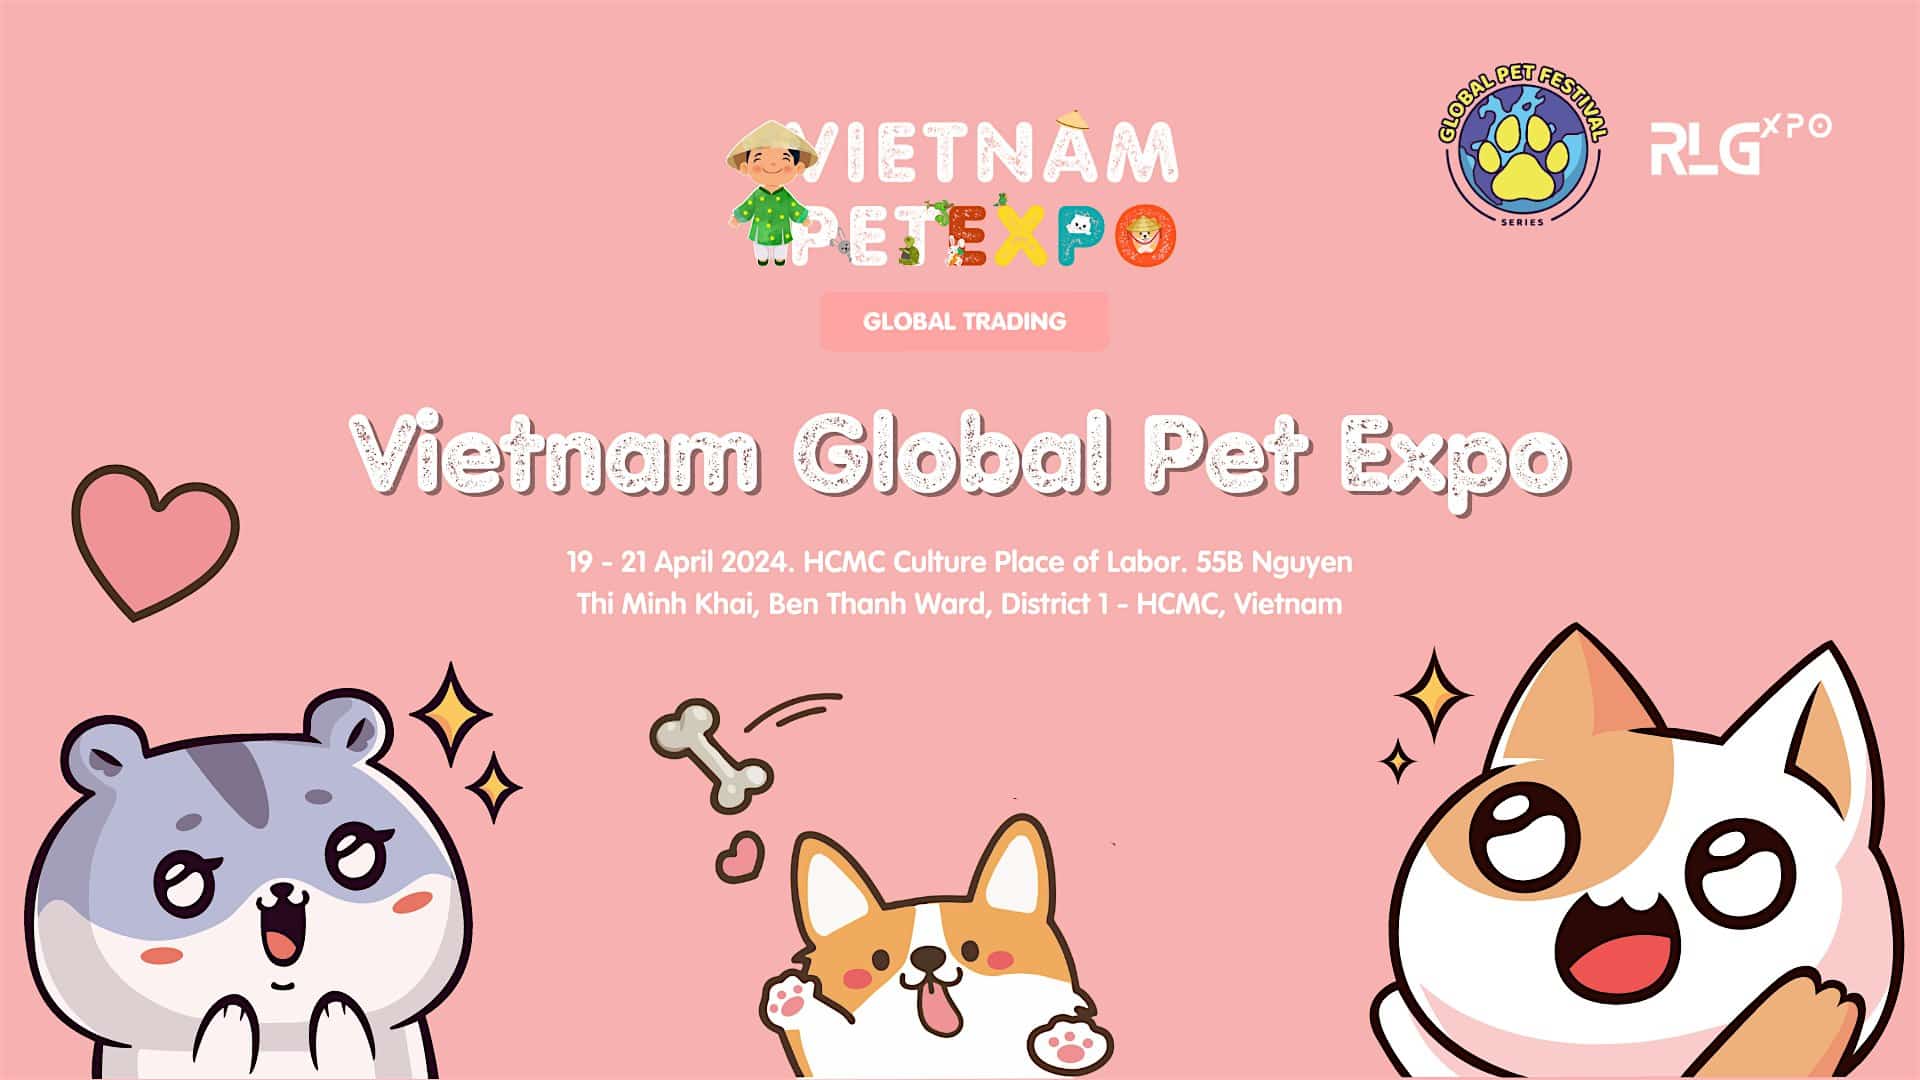 Vietnam Global Pet Expo 2024 Bangkok Insiders